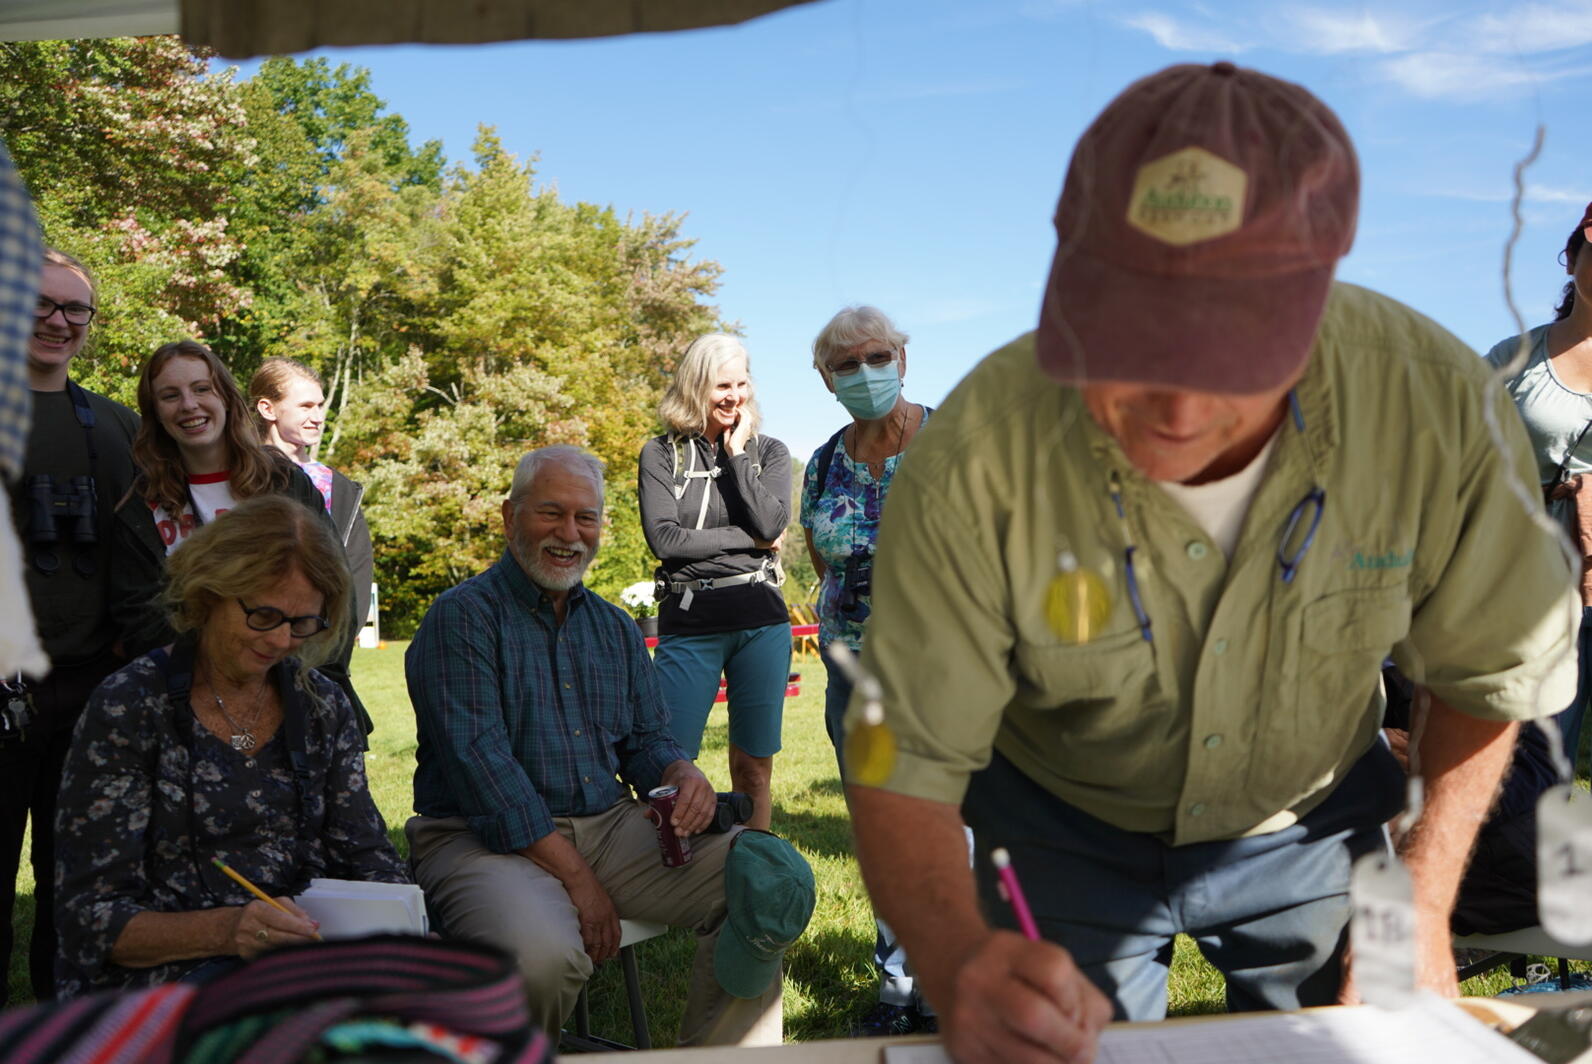 Conservation biologist Mark LaBarr bird banding at Audubon's Bird and Barn Festival.